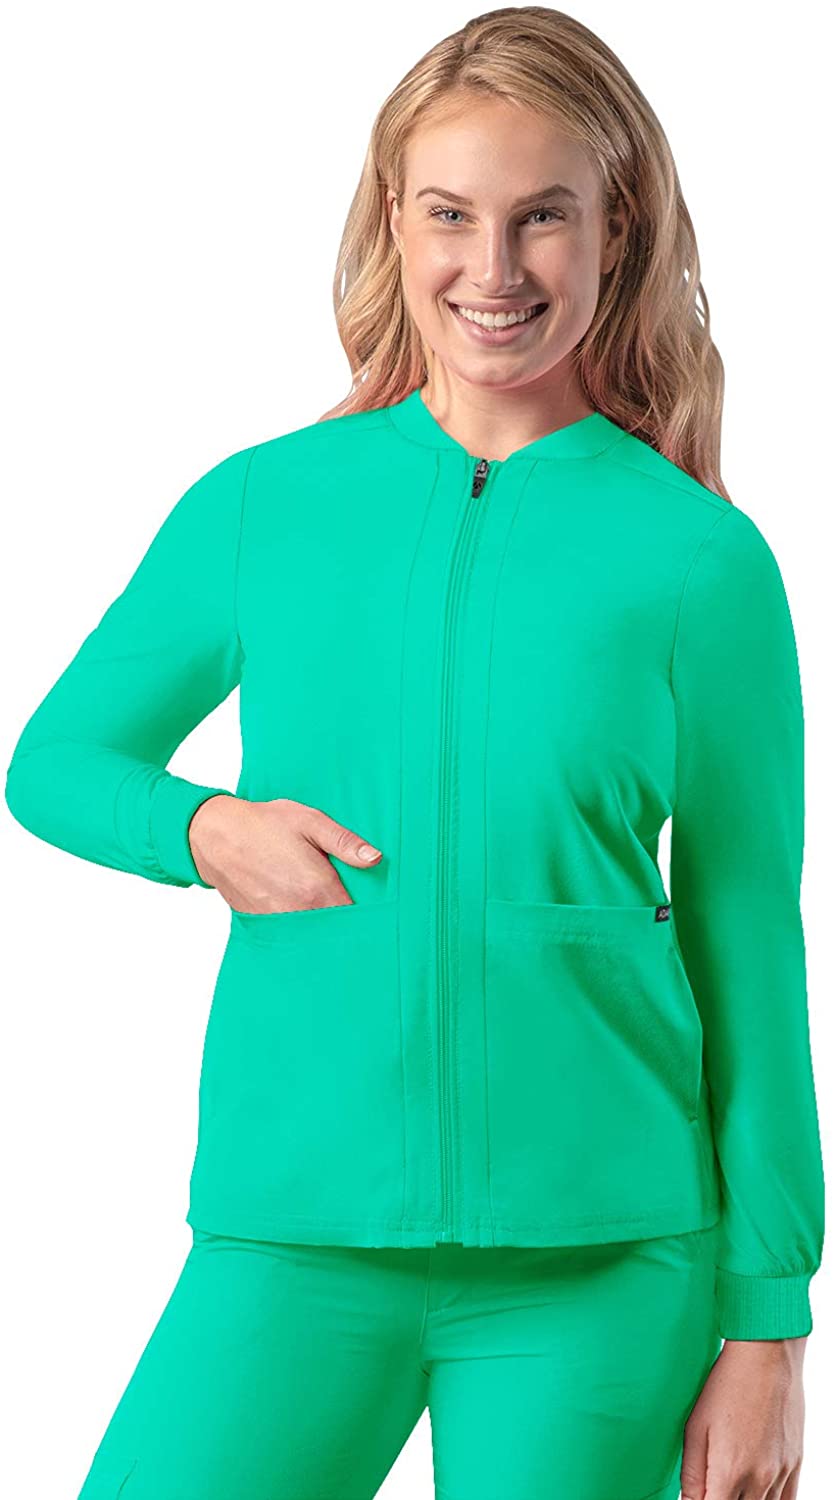 Adar Addition Scrubs for Women - Zippered Bomber Scrub Jacket | eBay